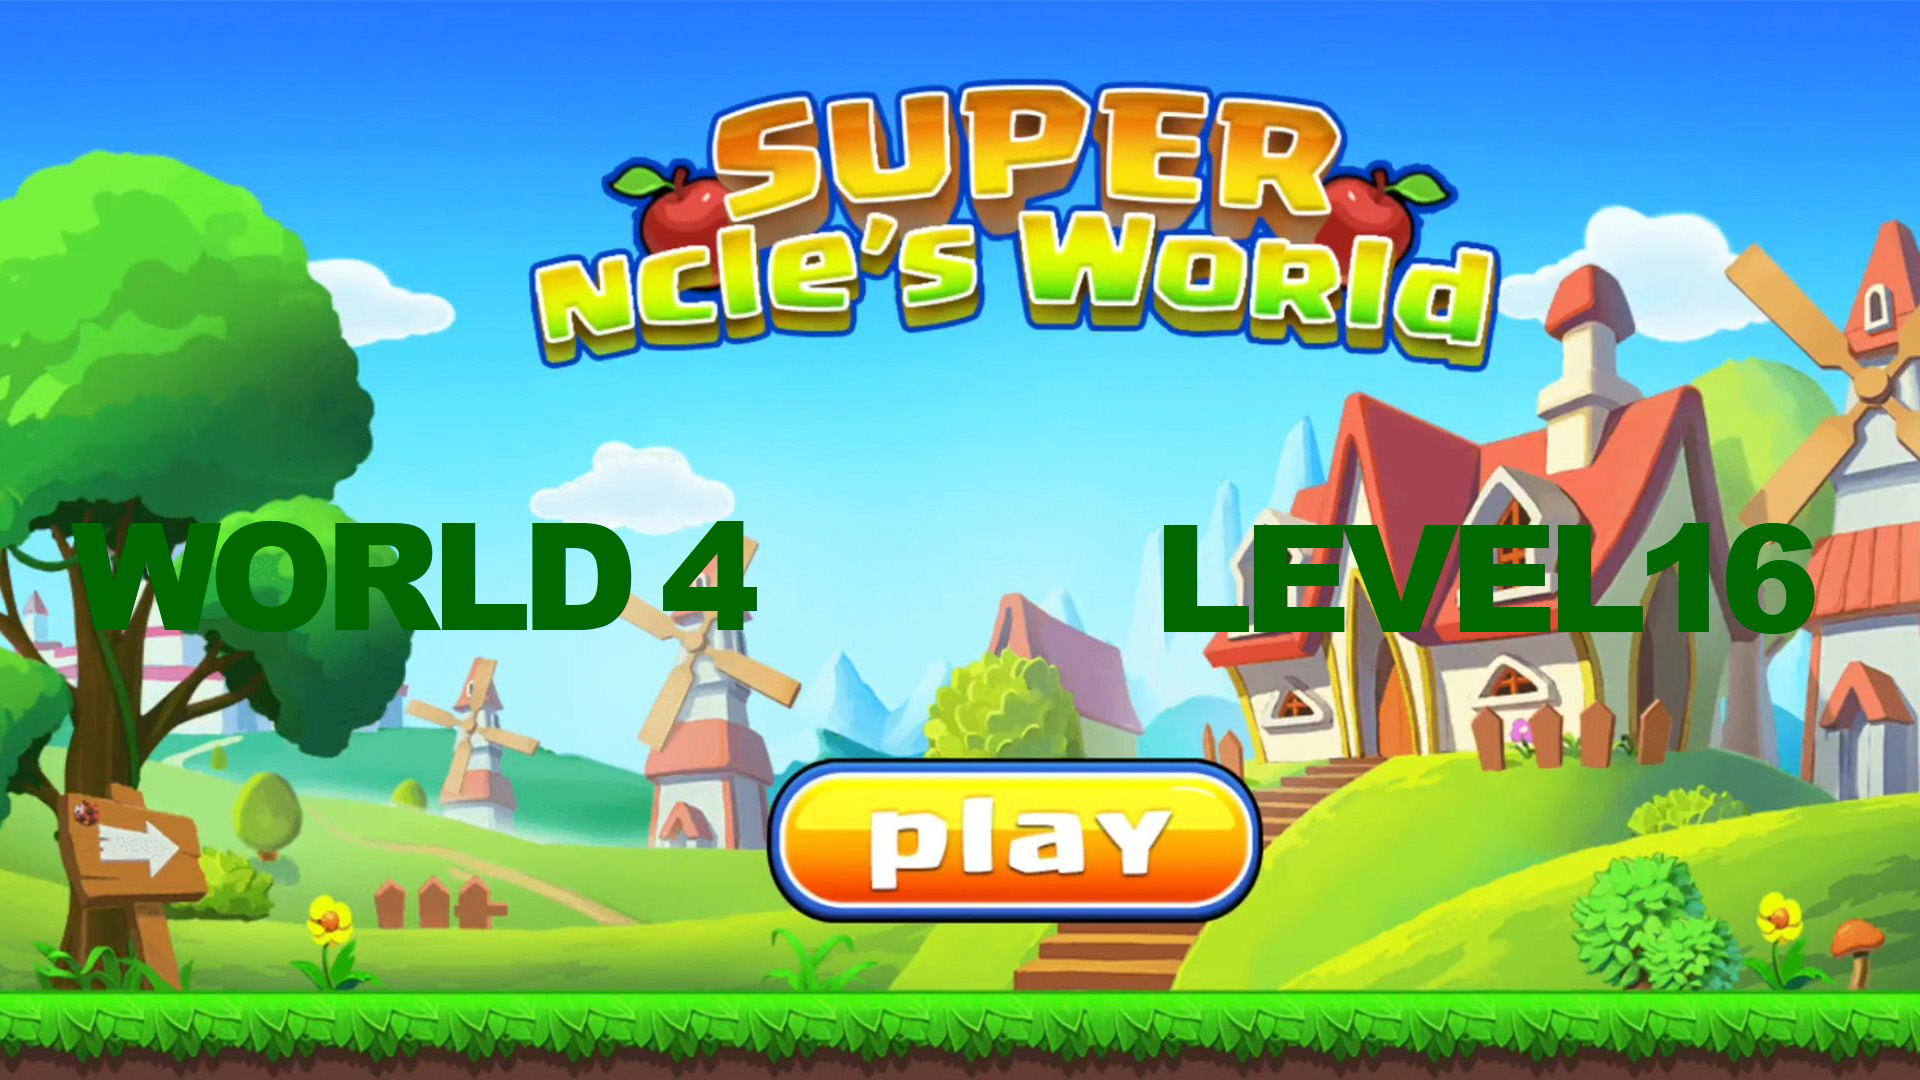 Super ncle's  World 4. Level 16.